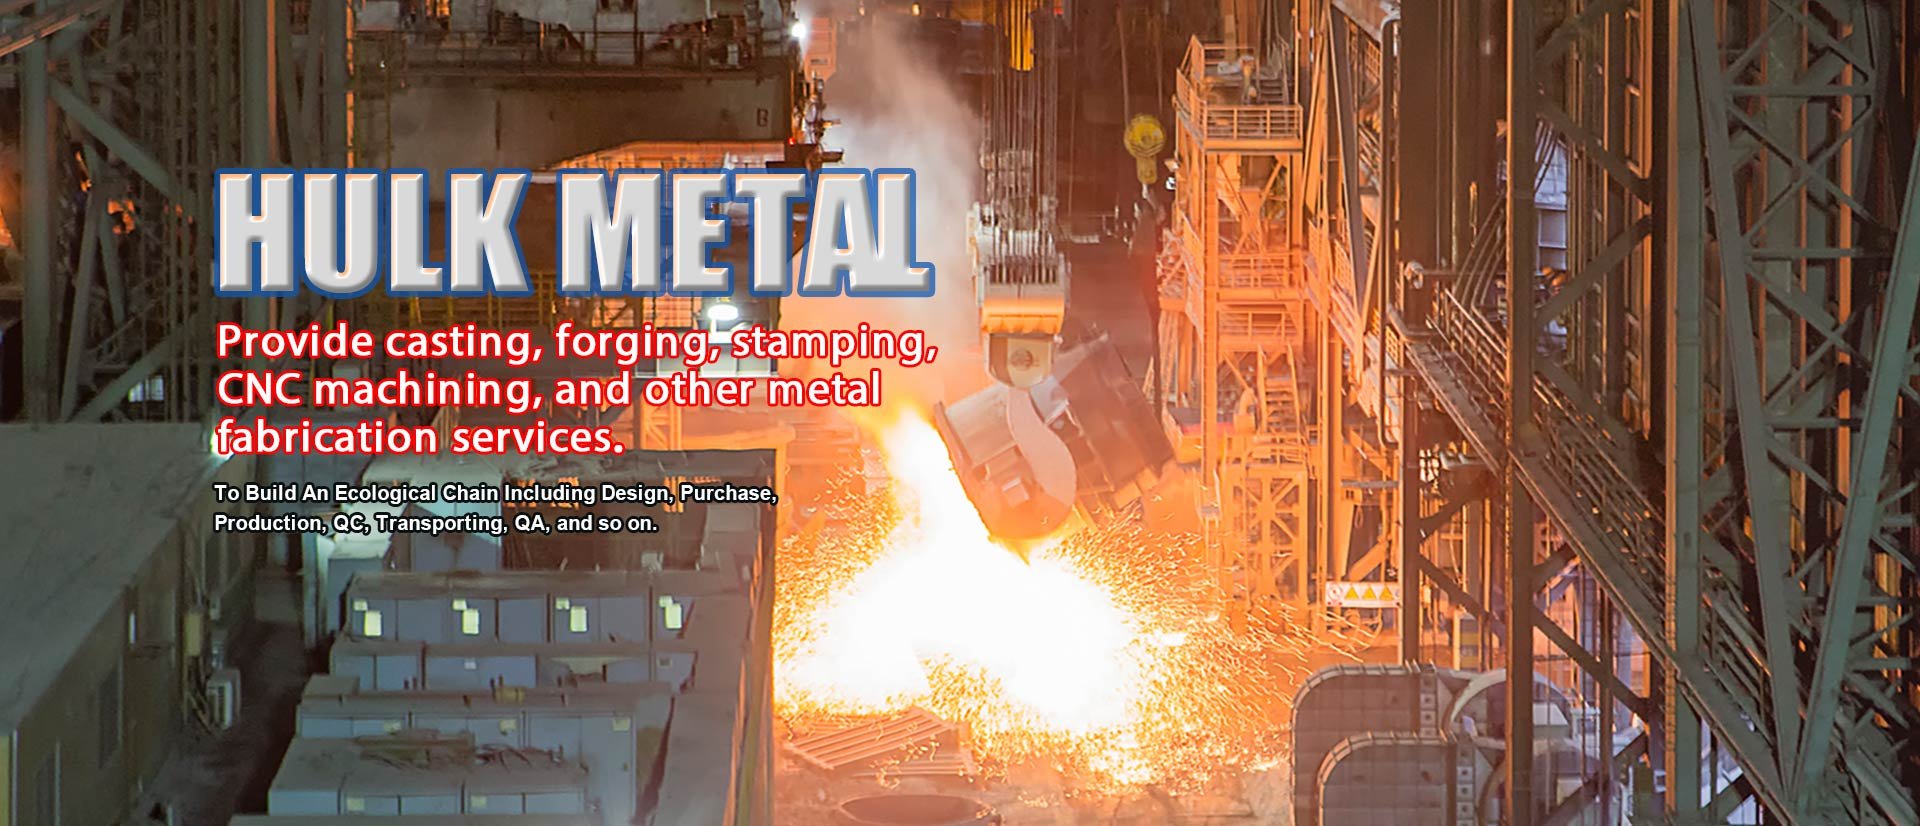 HULK Metal Products